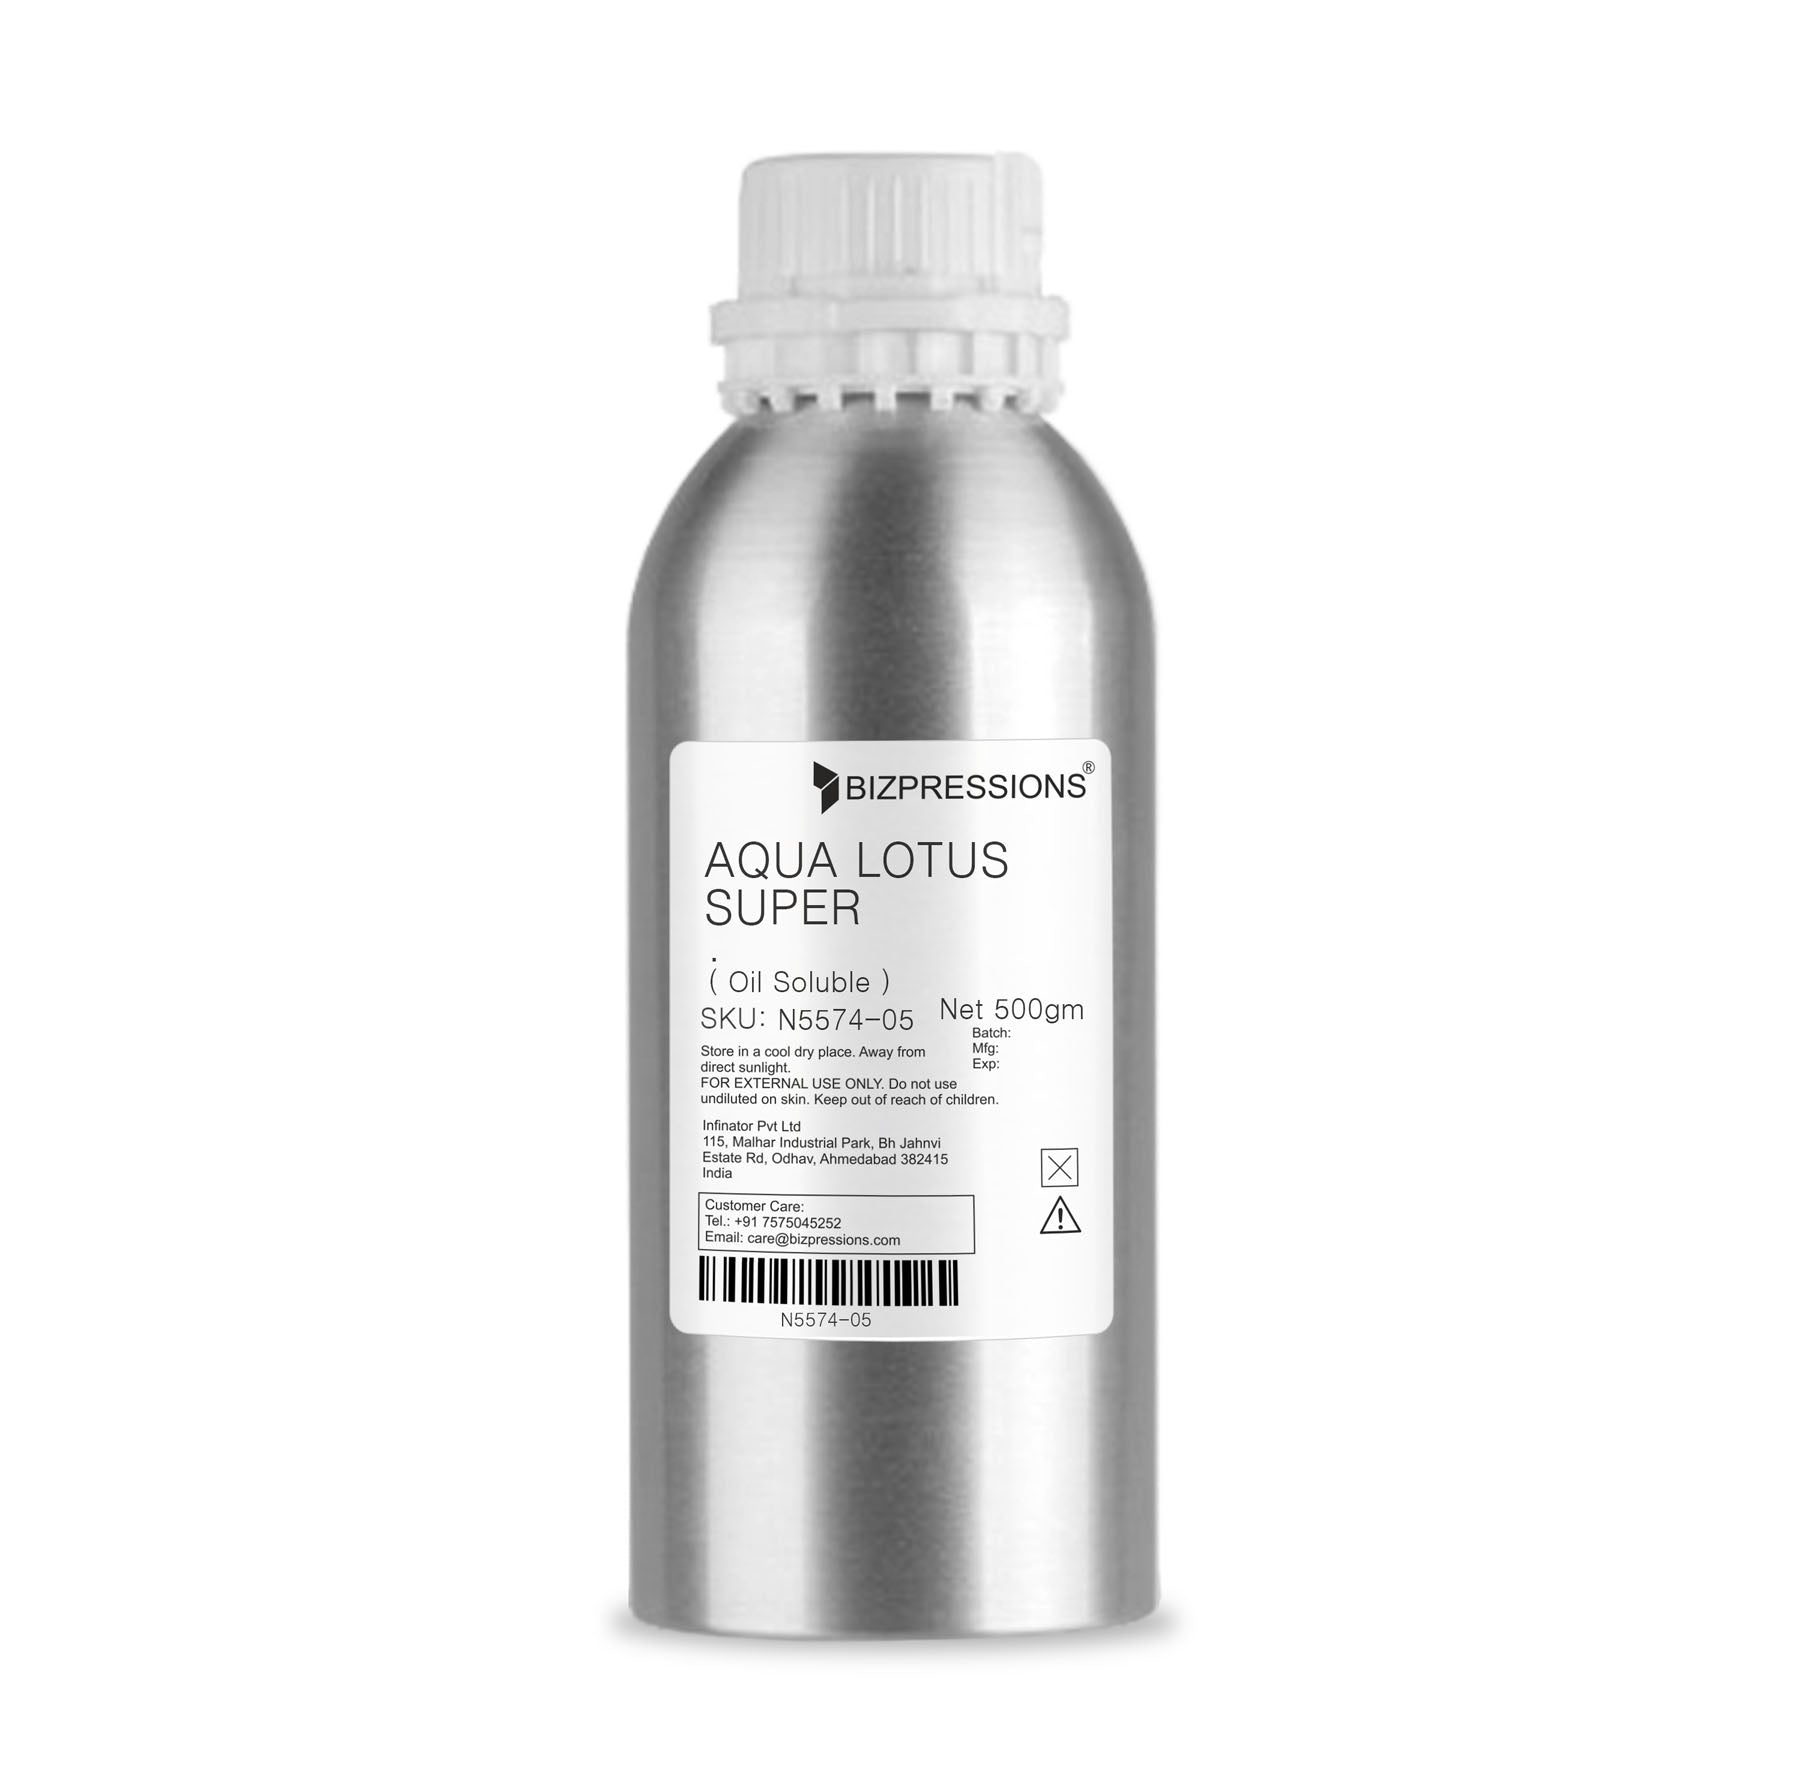 AQUA LOTUS SUPER - Fragrance ( Oil Soluble ) - 500 gm